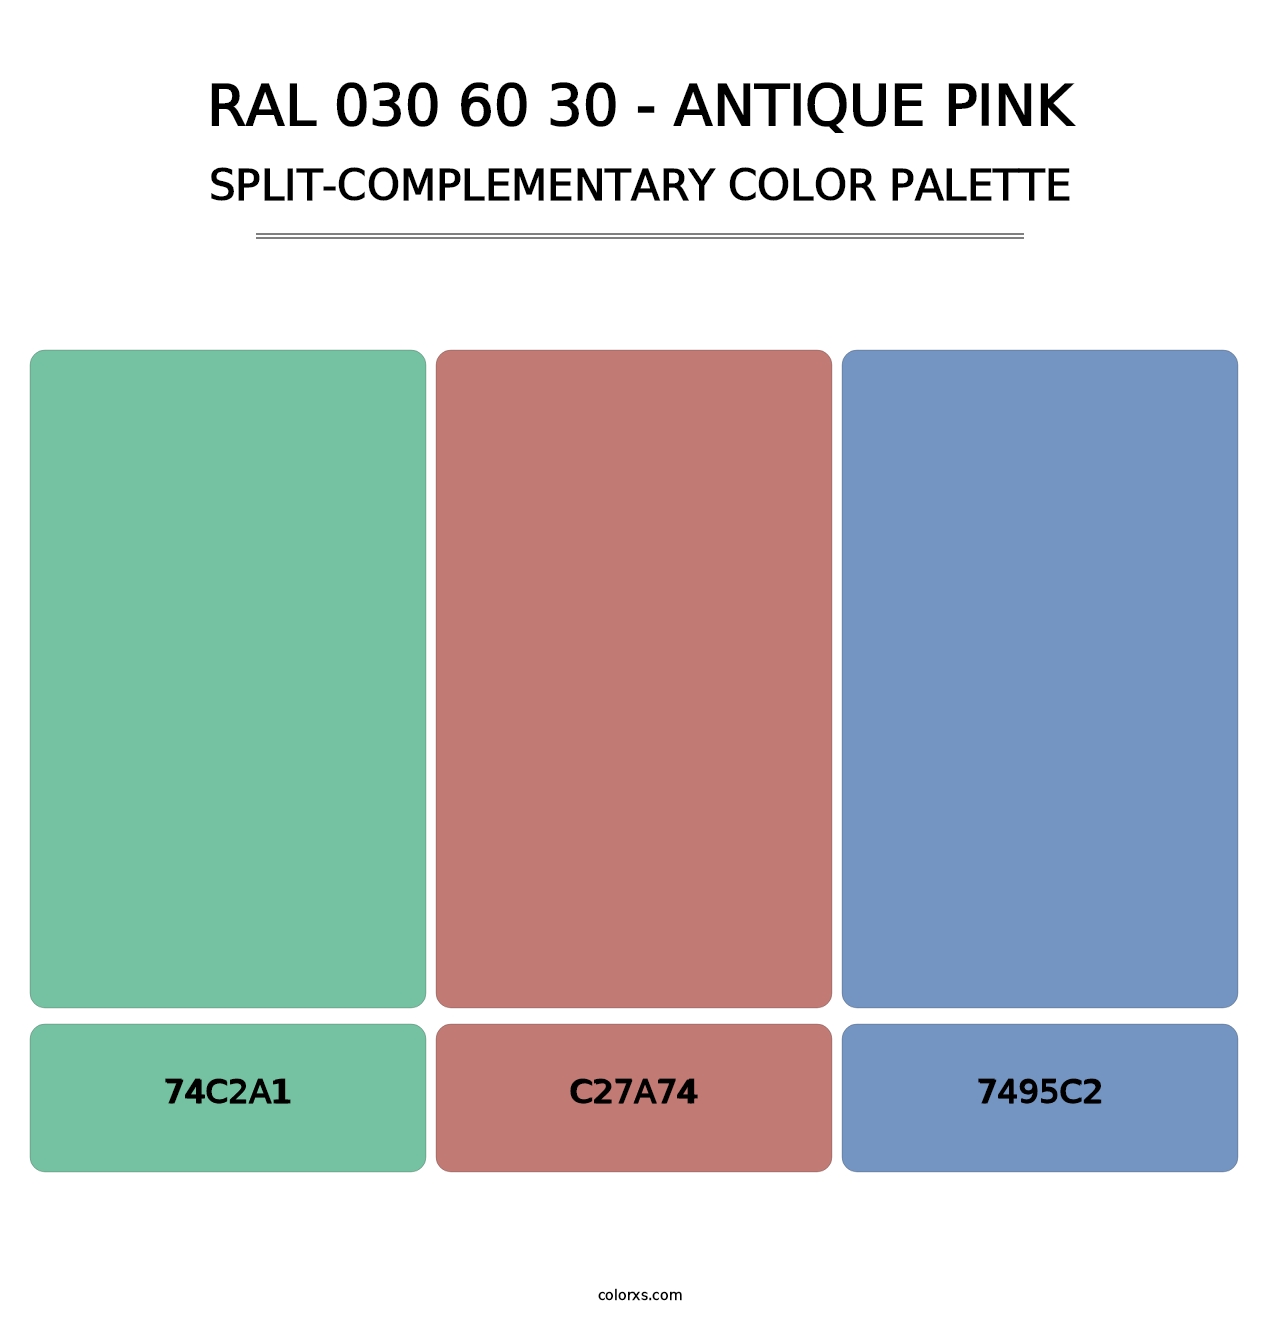 RAL 030 60 30 - Antique Pink - Split-Complementary Color Palette